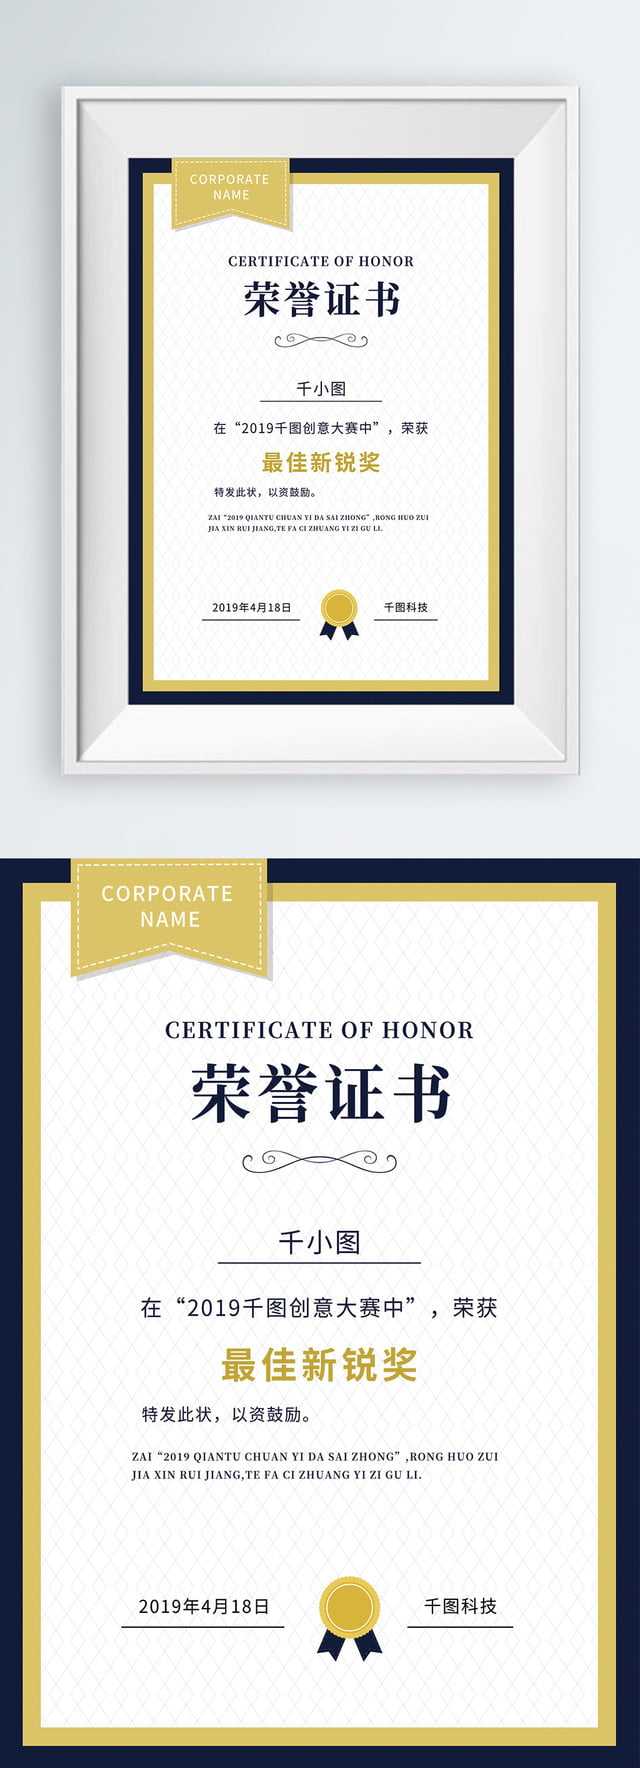 Certificate Authorization Certificate Certificate Of Honor Regarding Certificate Of Authorization Template